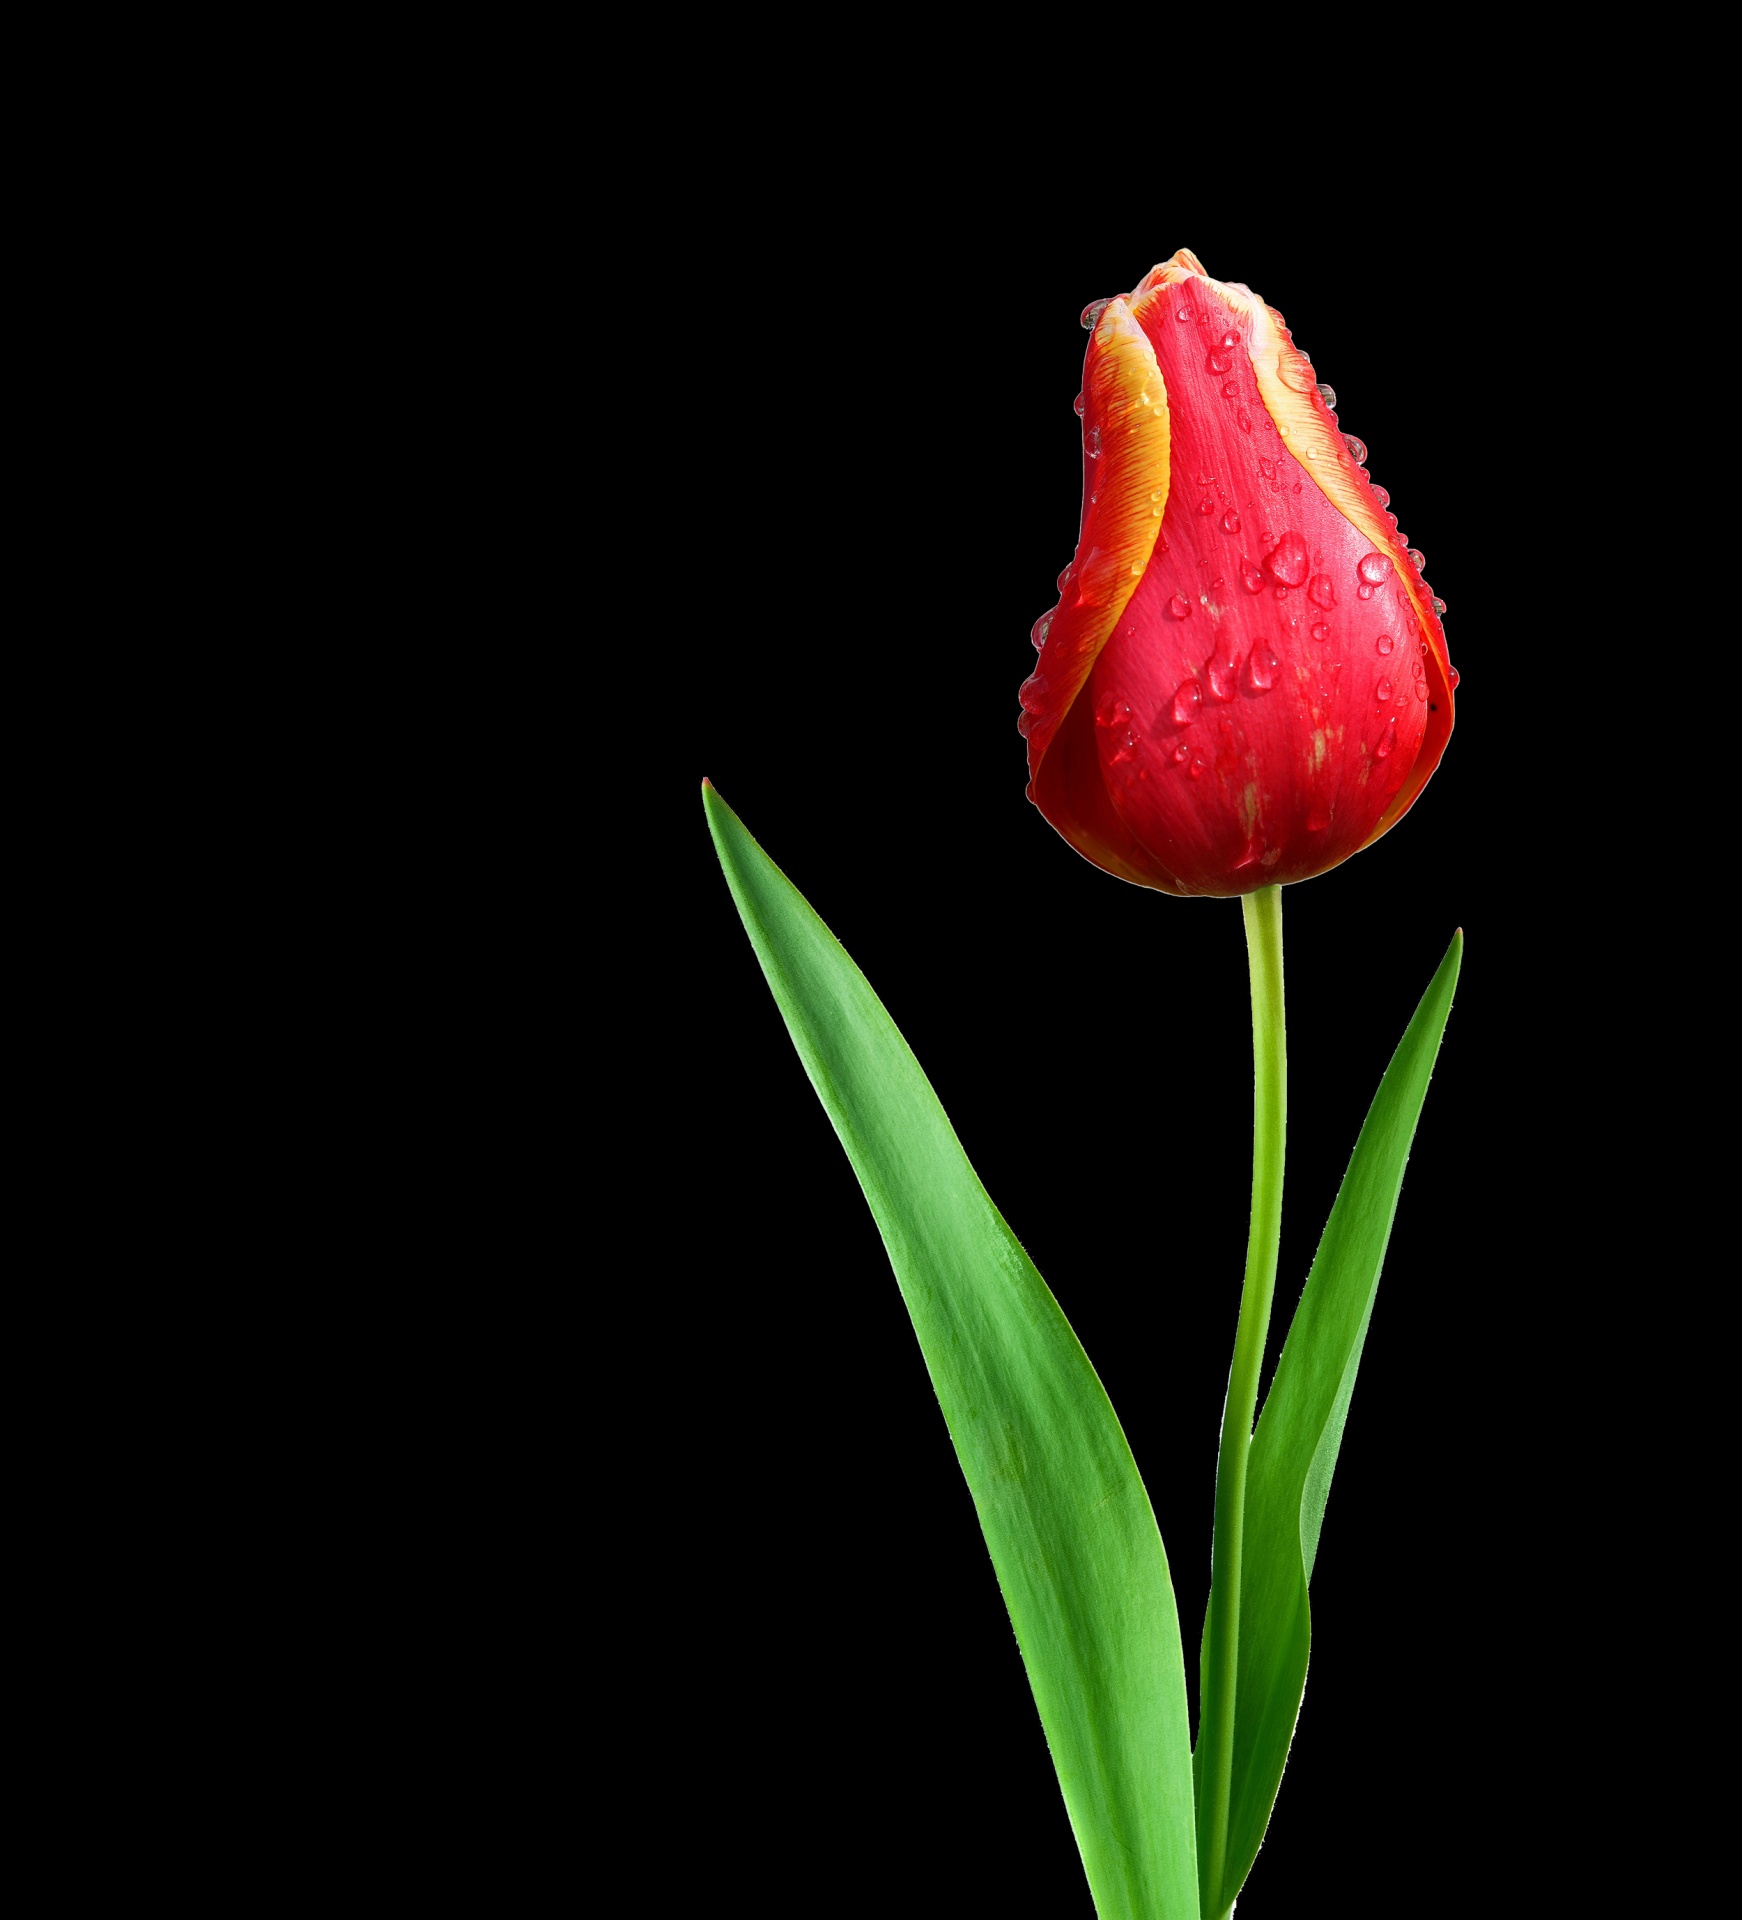 Tulip Flower Red Black Background Free Image From Needpix Com